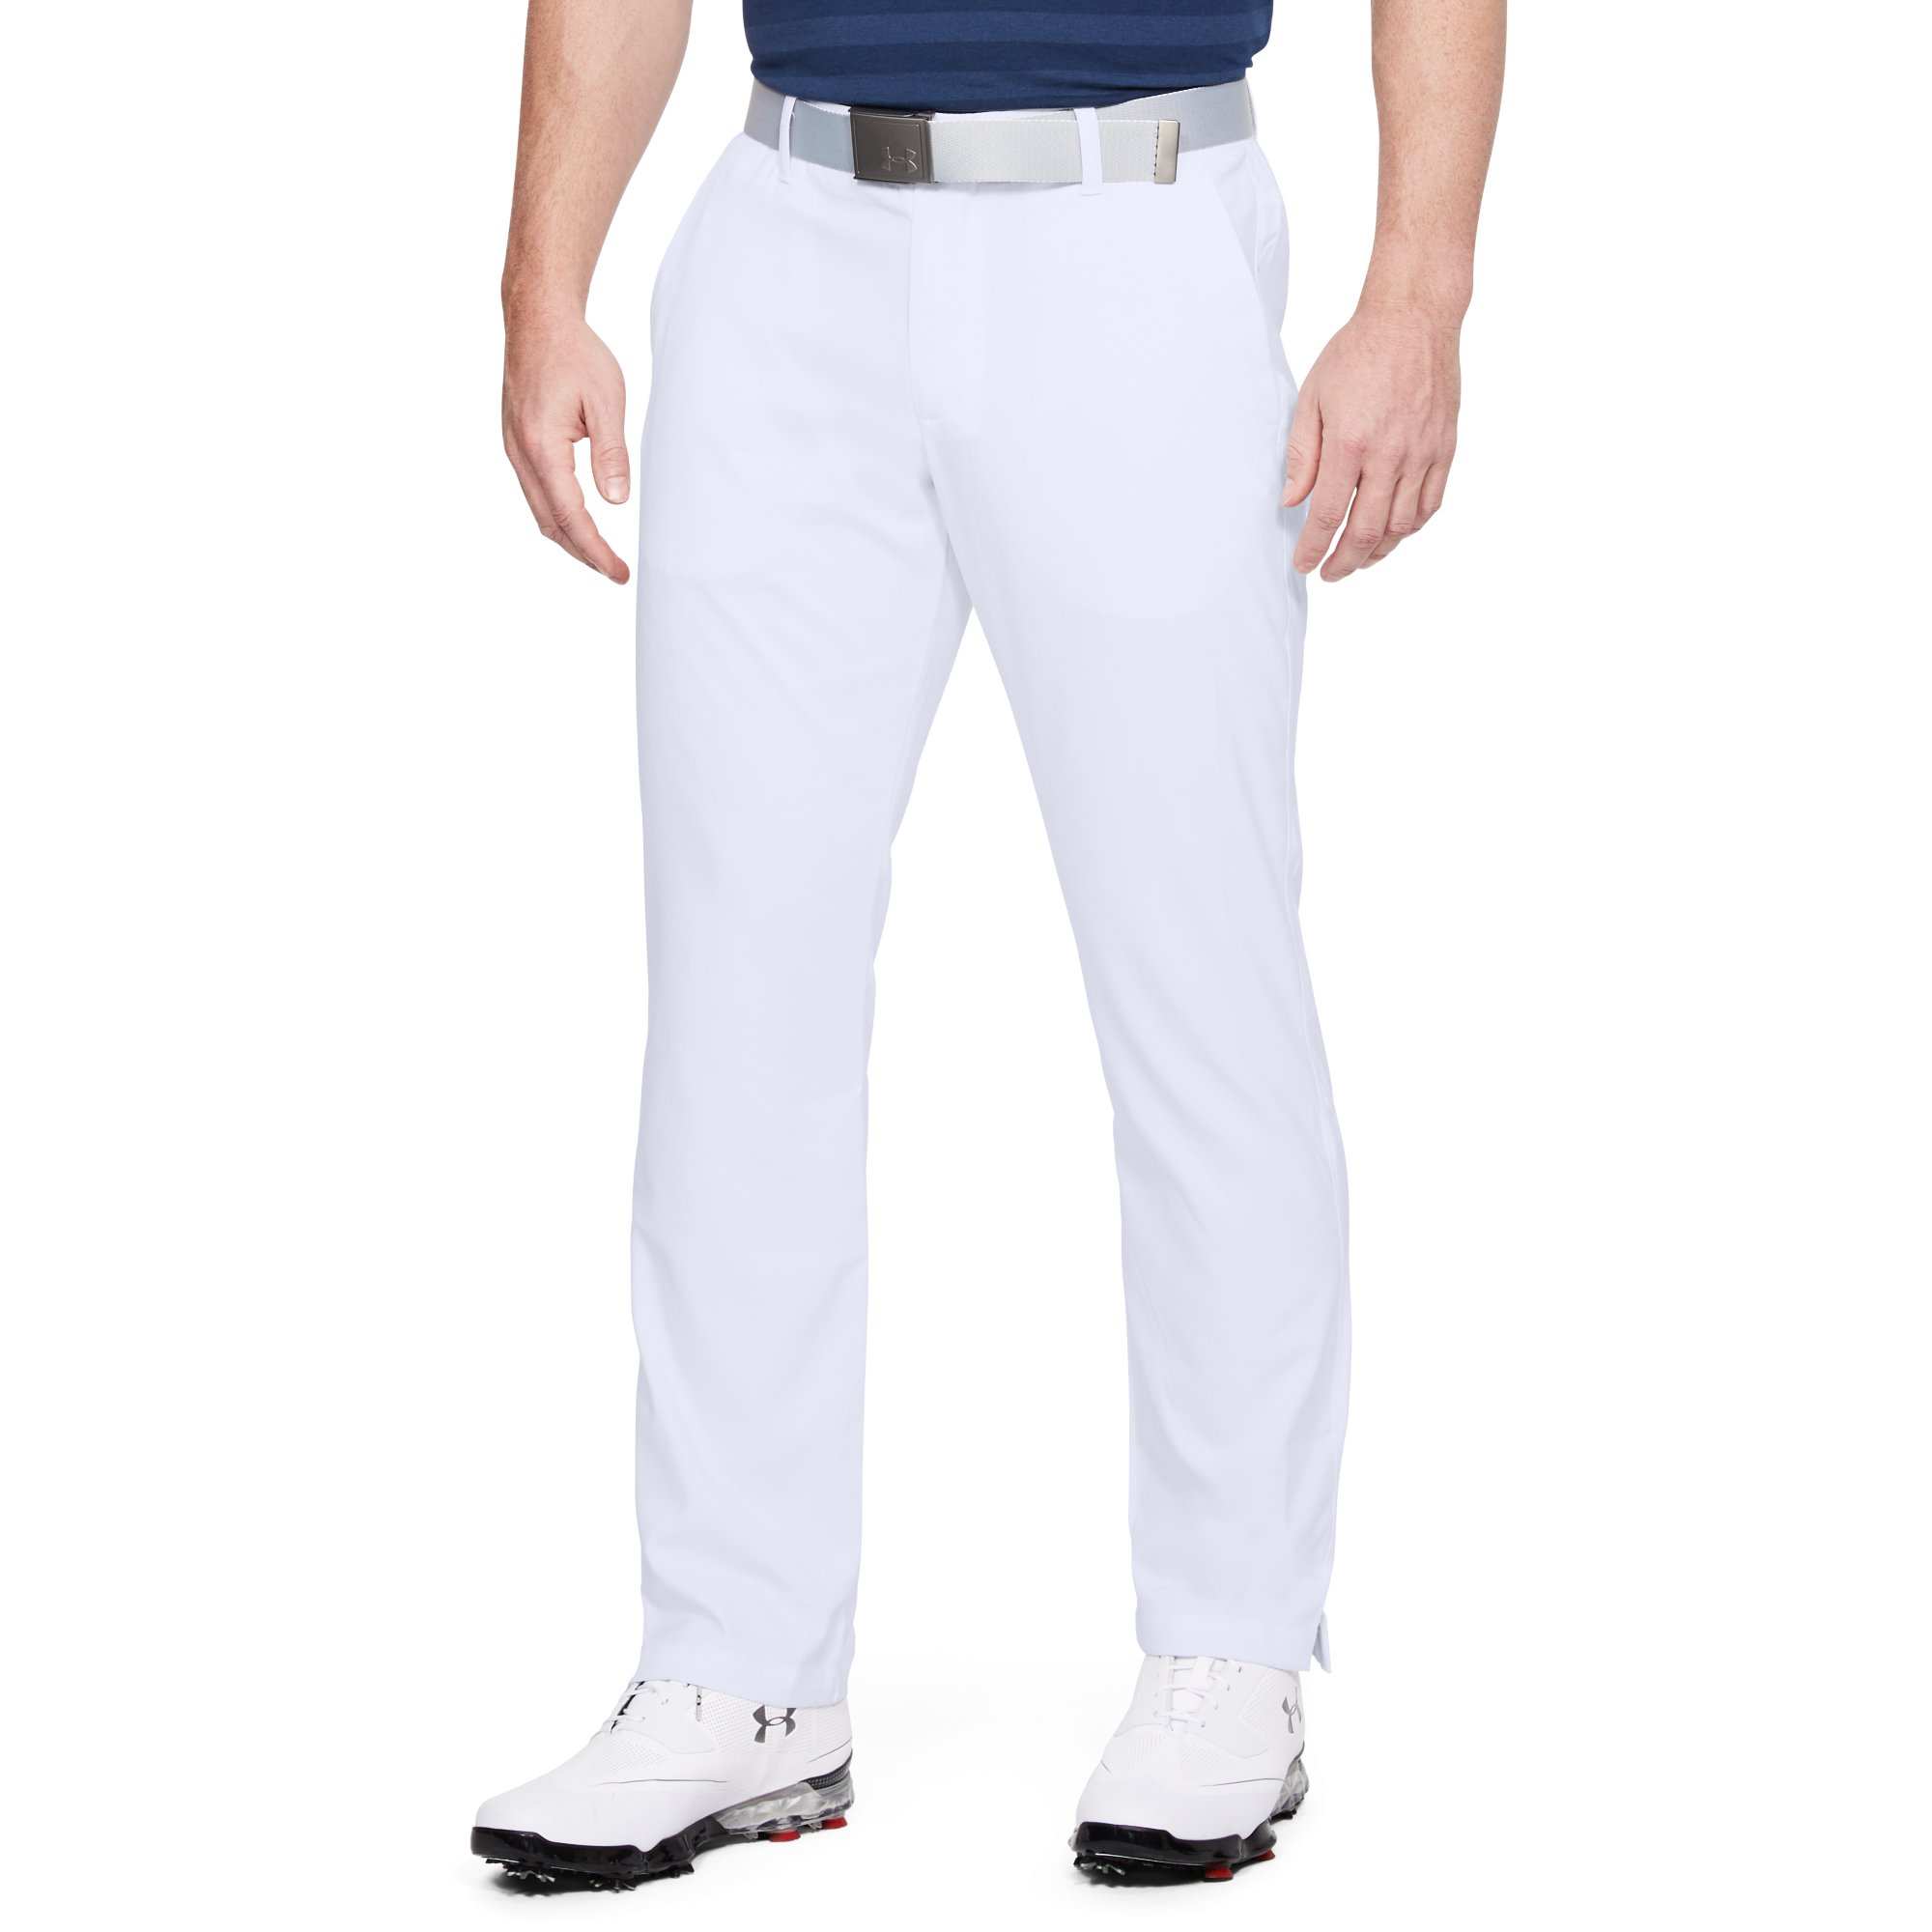 Under Armour 2022 Boys Boys Golf Pant Mod Gray  Clothing from Gamola Golf  Ltd UK